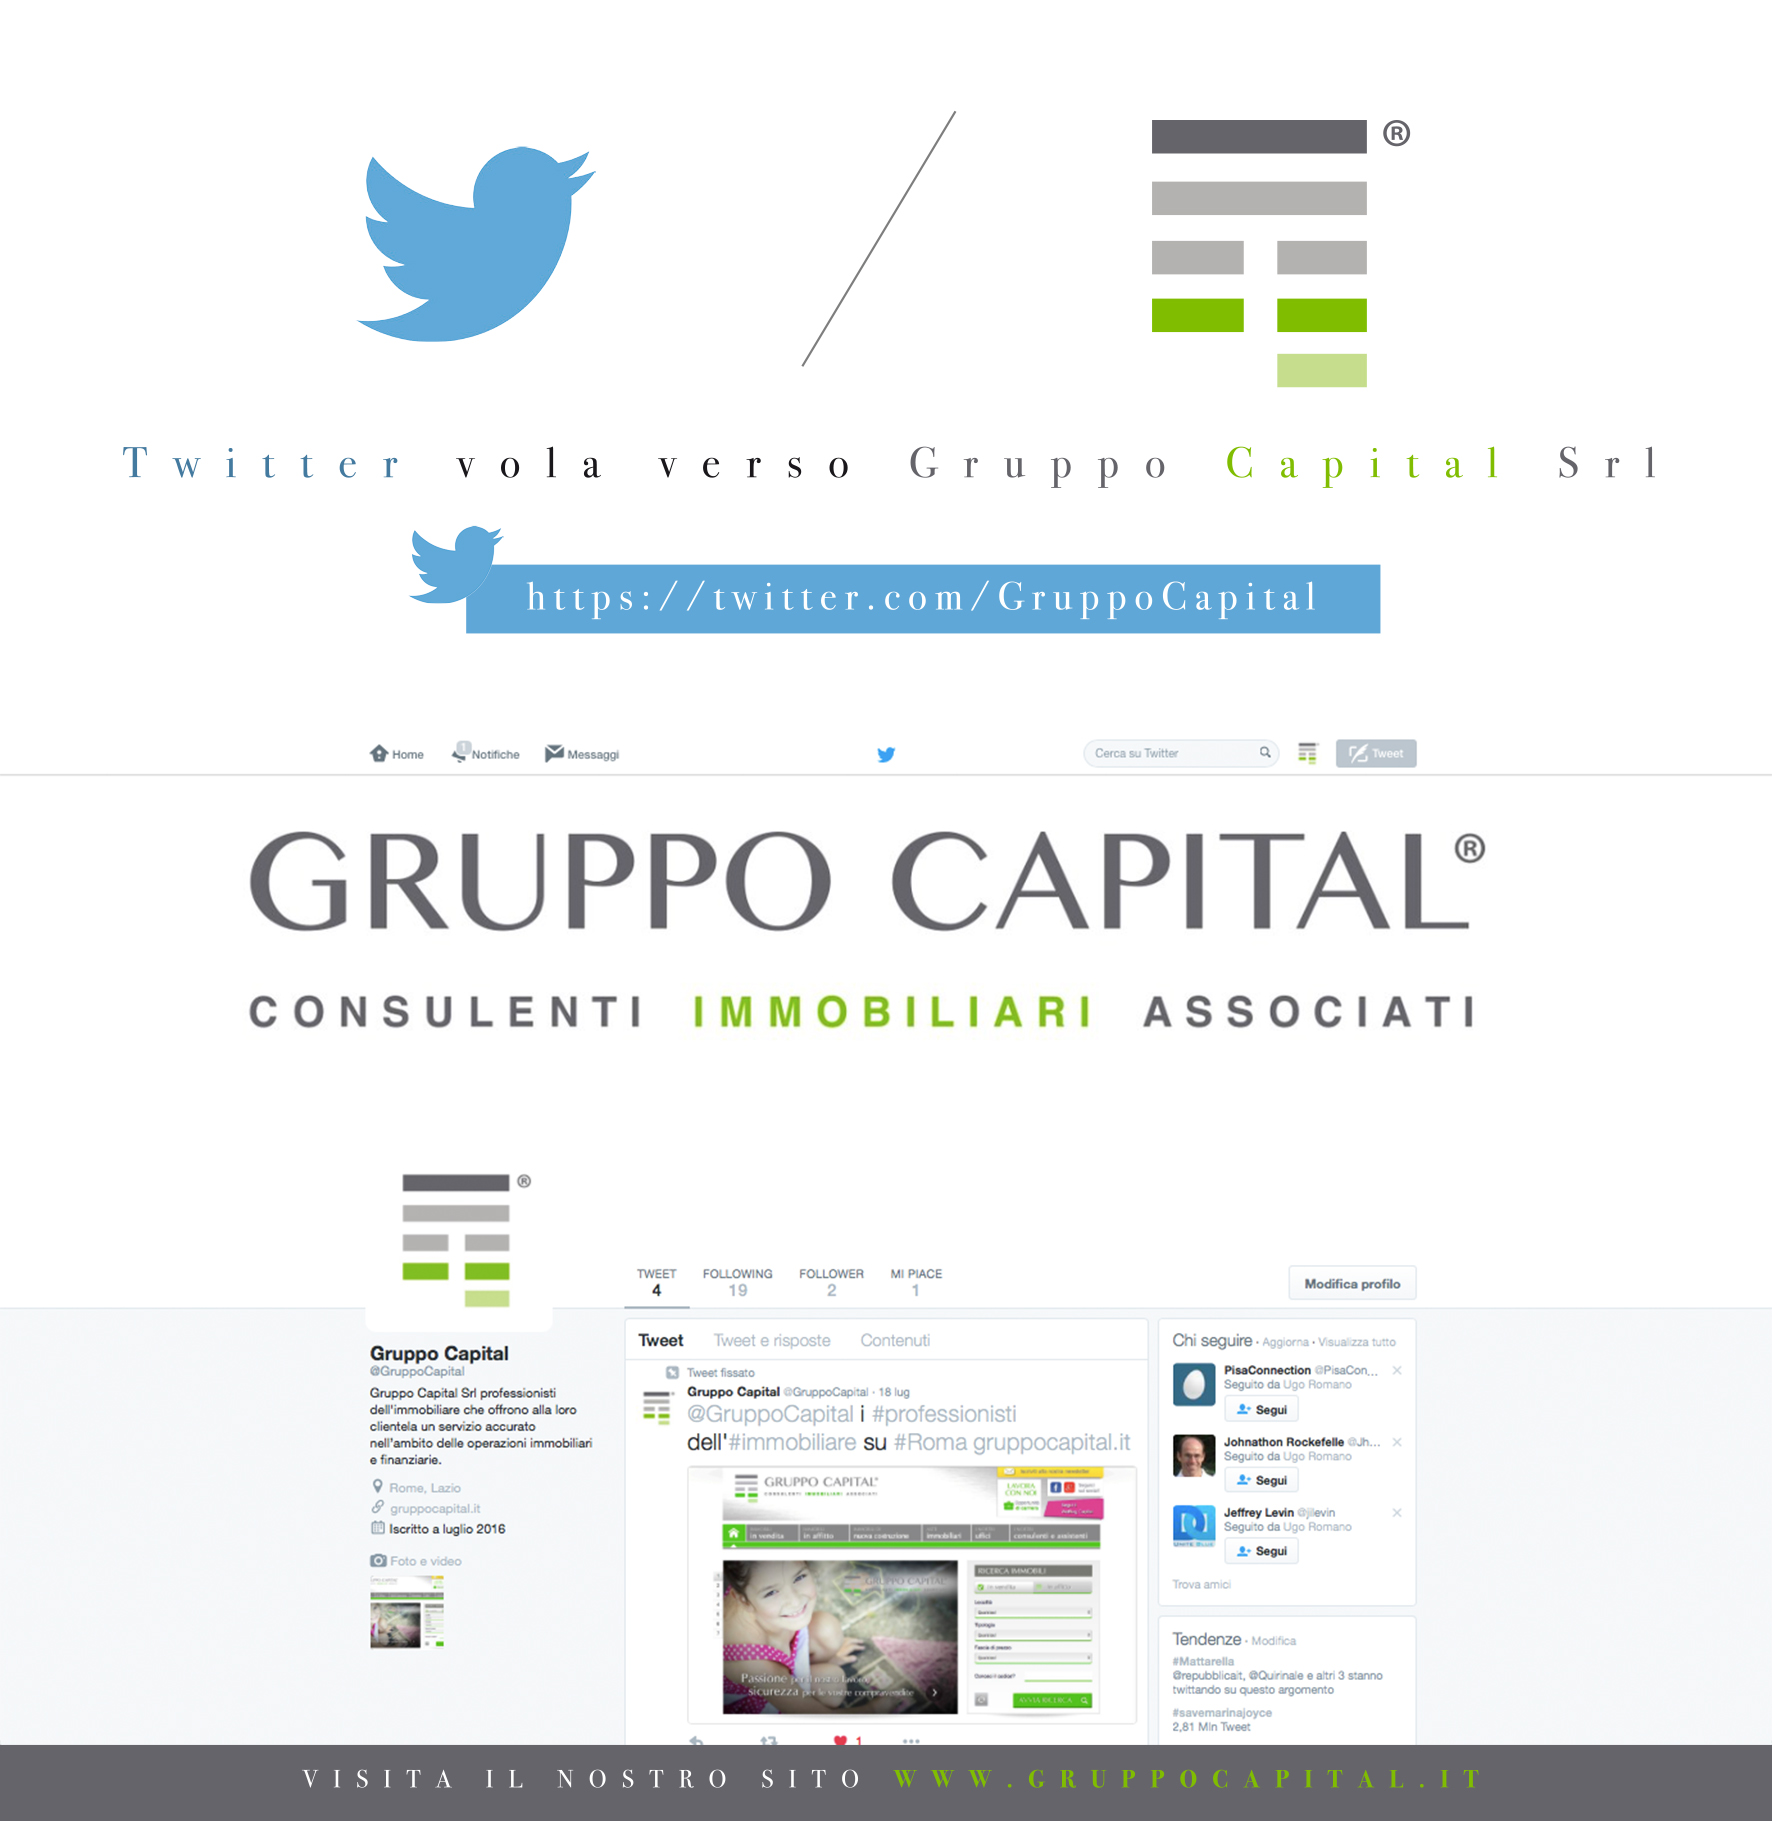 “Twitter vola verso Gruppo Capital Srl”